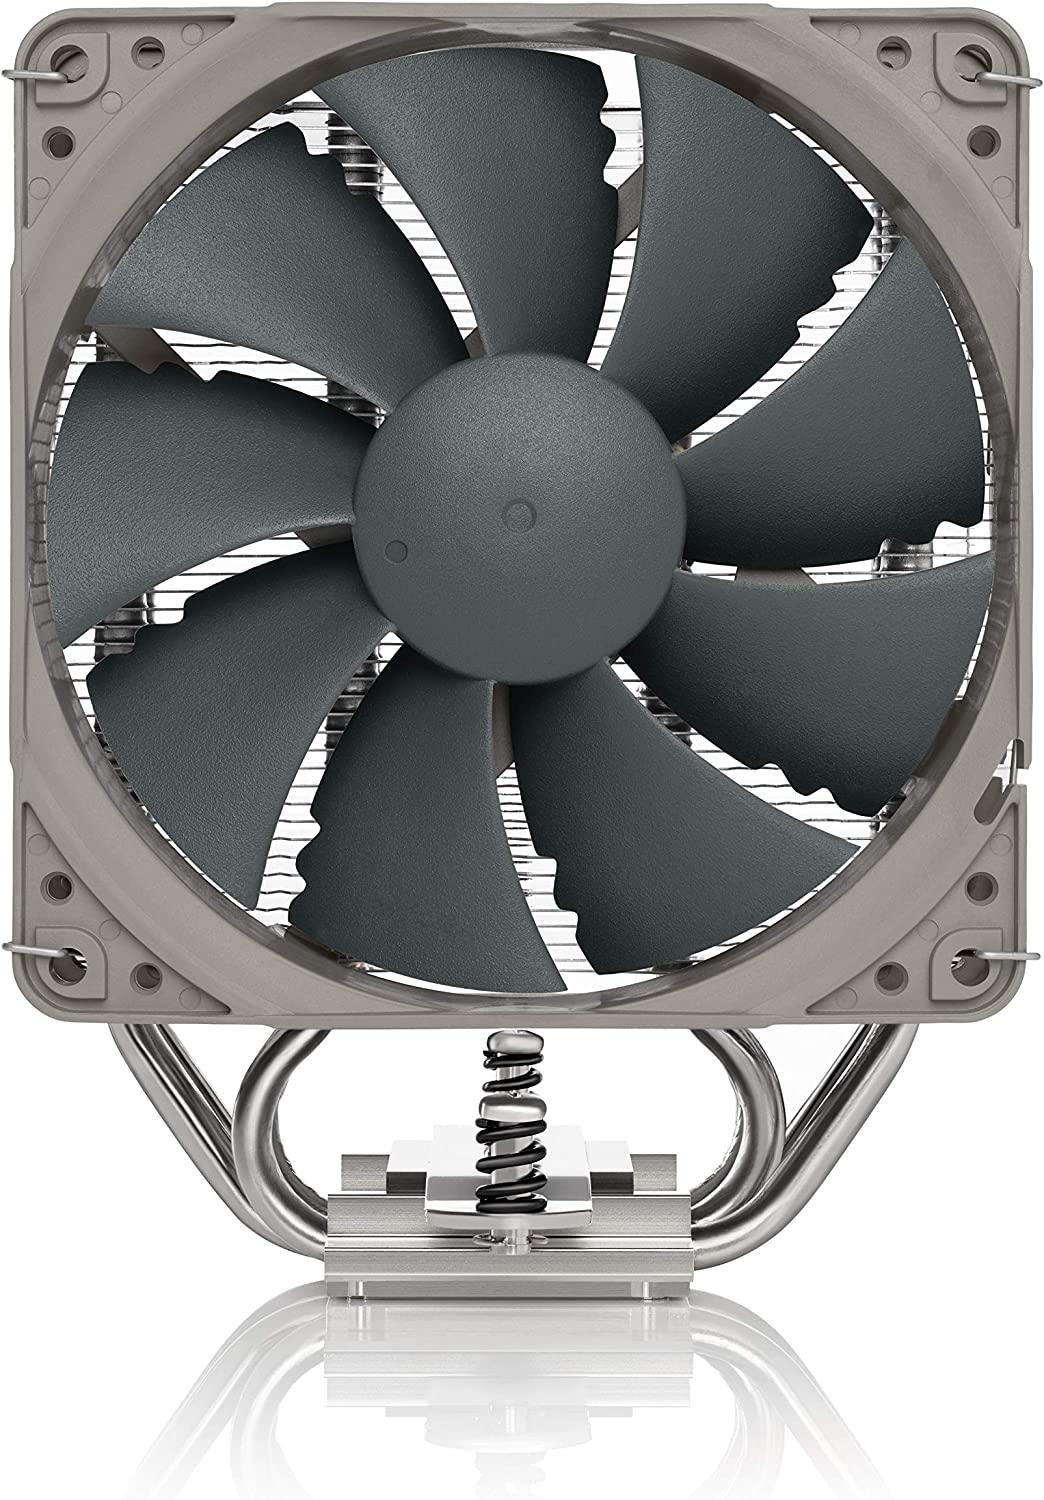 Noctua NH-U12S Redux, High Performance CPU Cooler with NF-P12 redux-1700 PWM 120mm Fan (Grey) - ALARABIYA COMPUTER